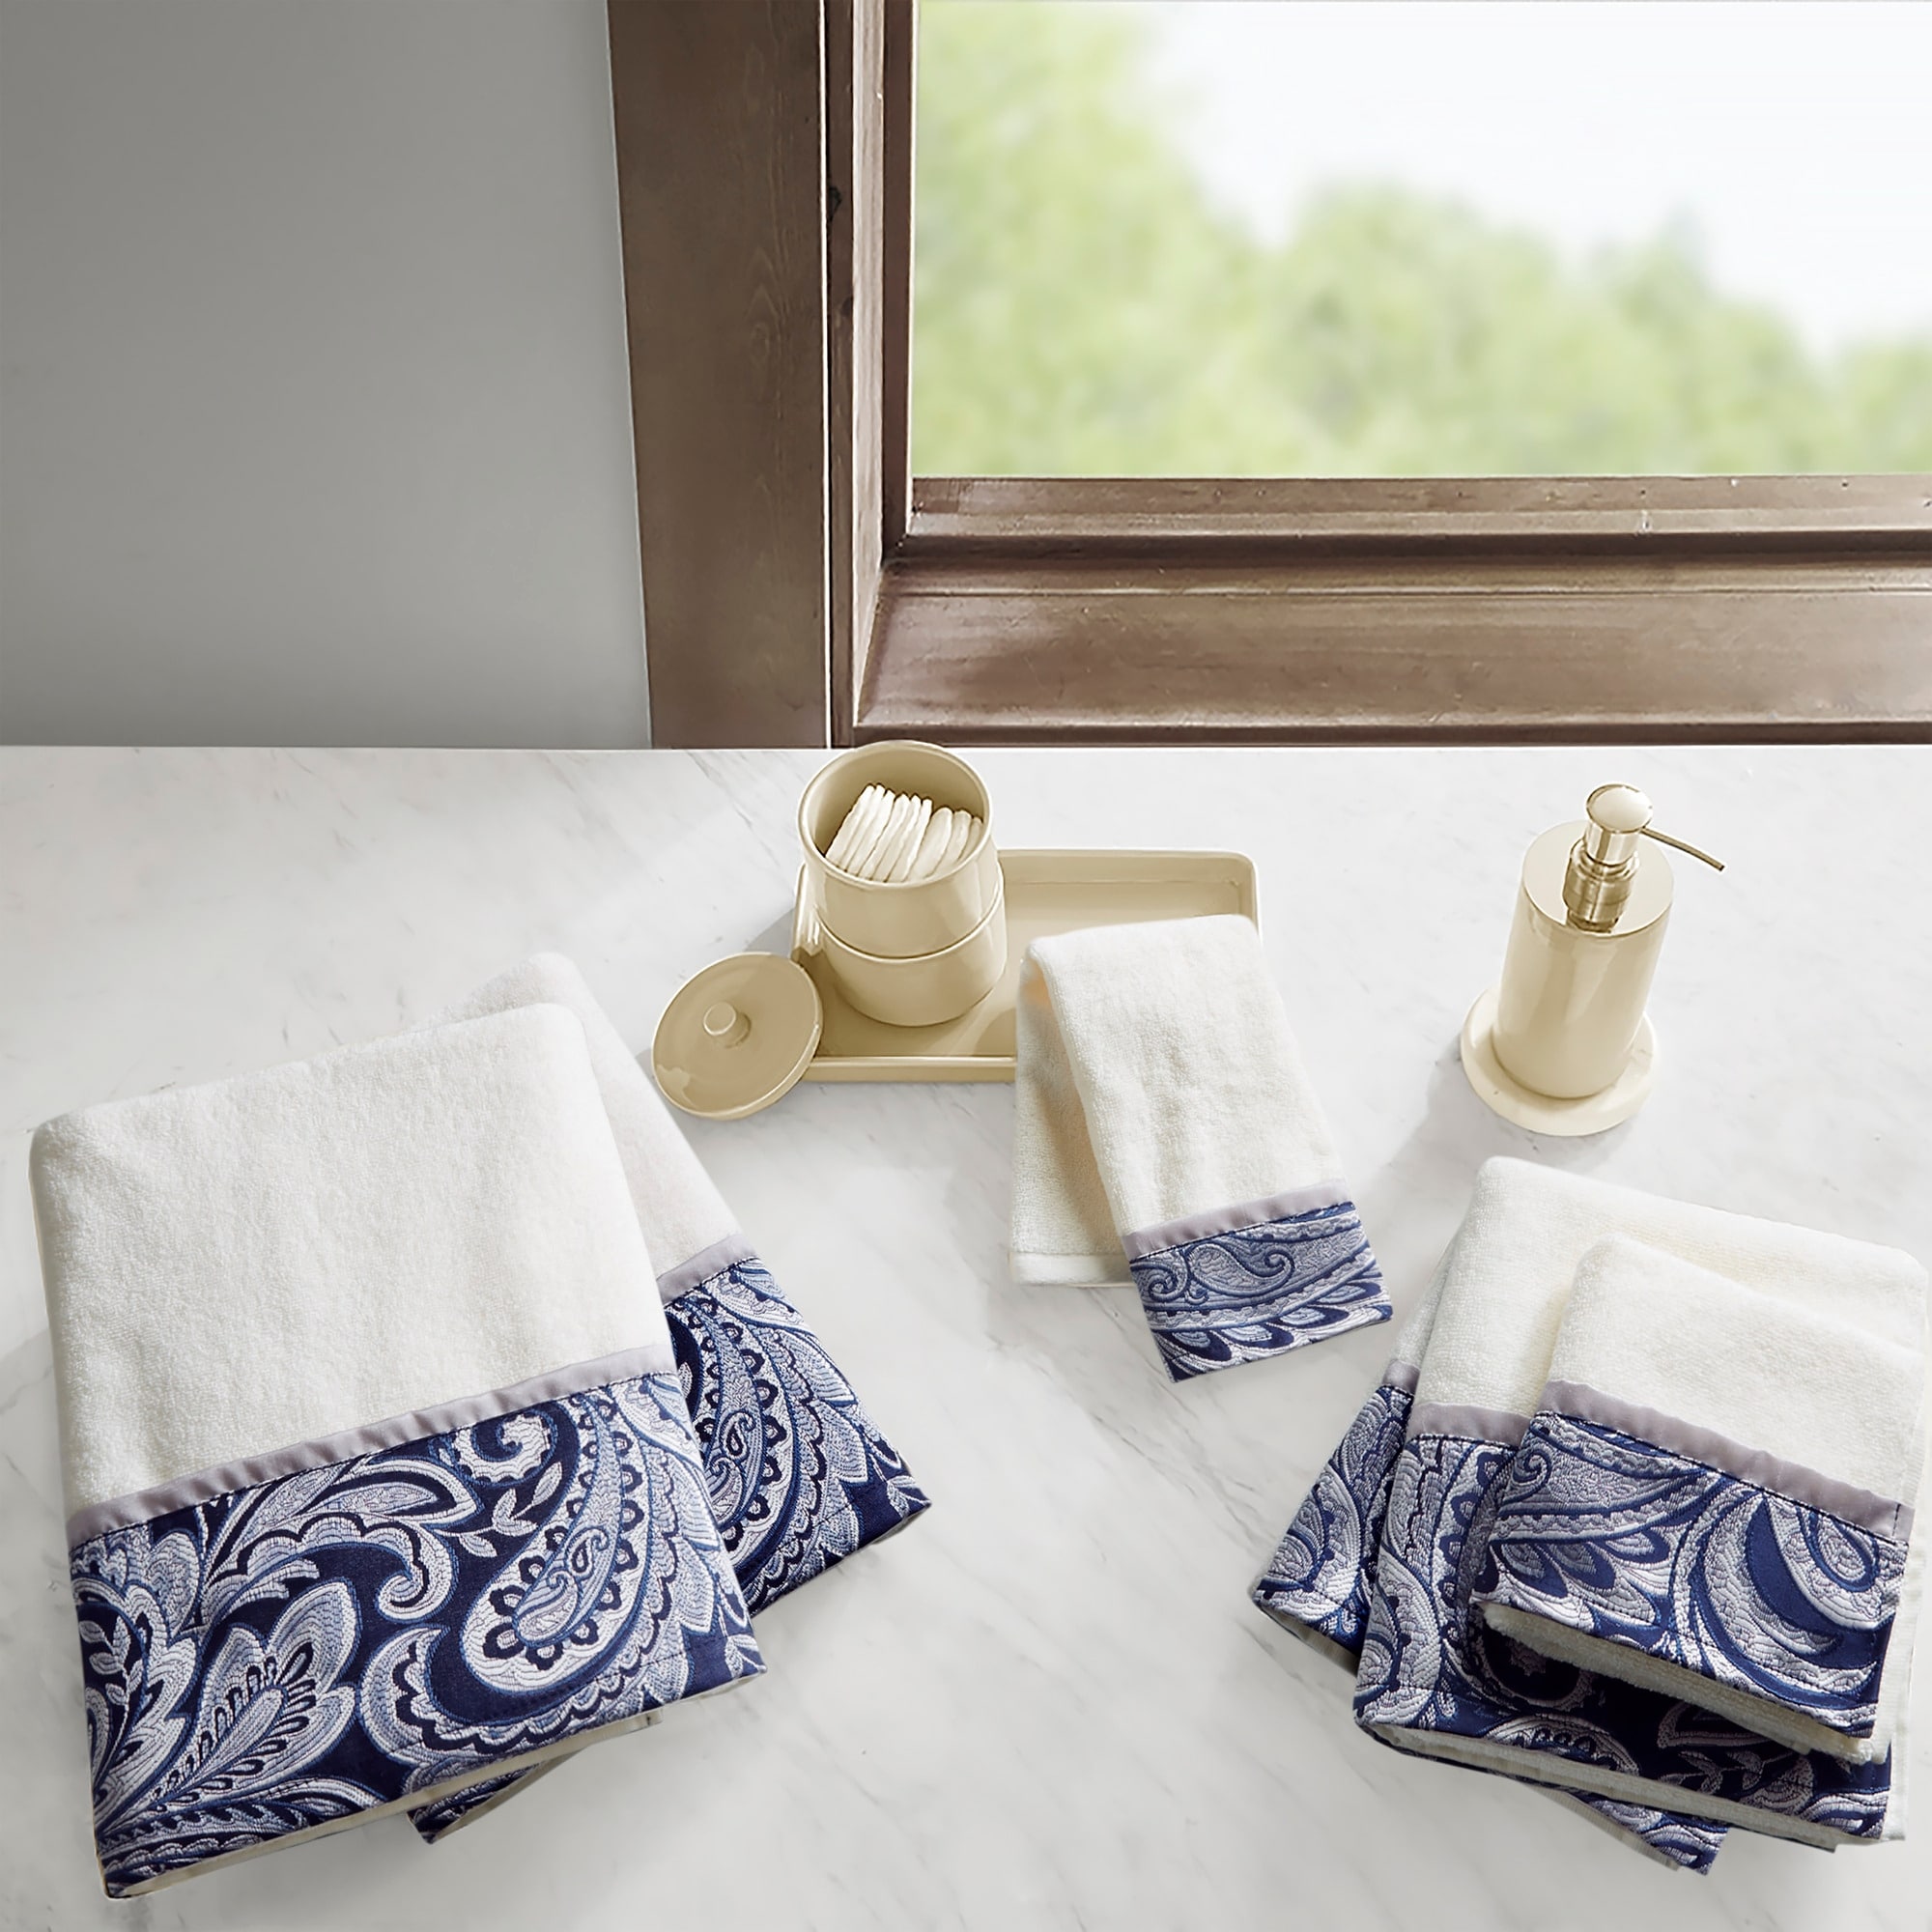 Simply Vera Wang Turkish Cotton Luxury 6 pc Bath, Hand Towel Set - Ocean  Blue